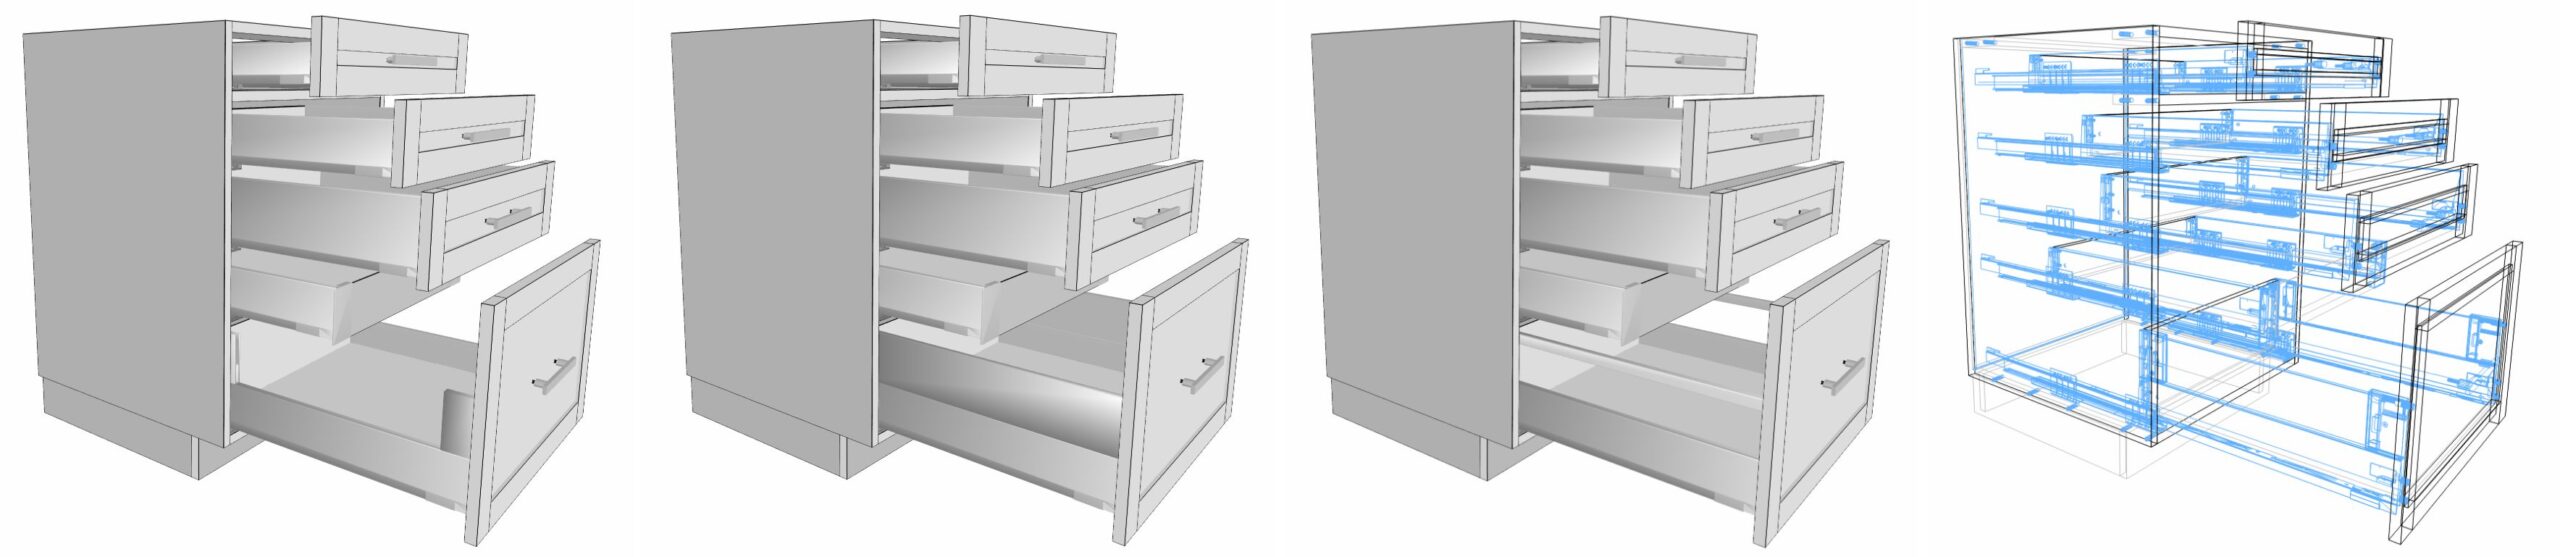 Blum Merivobox quincaillerie de tiroirs pour Cabinet Vision